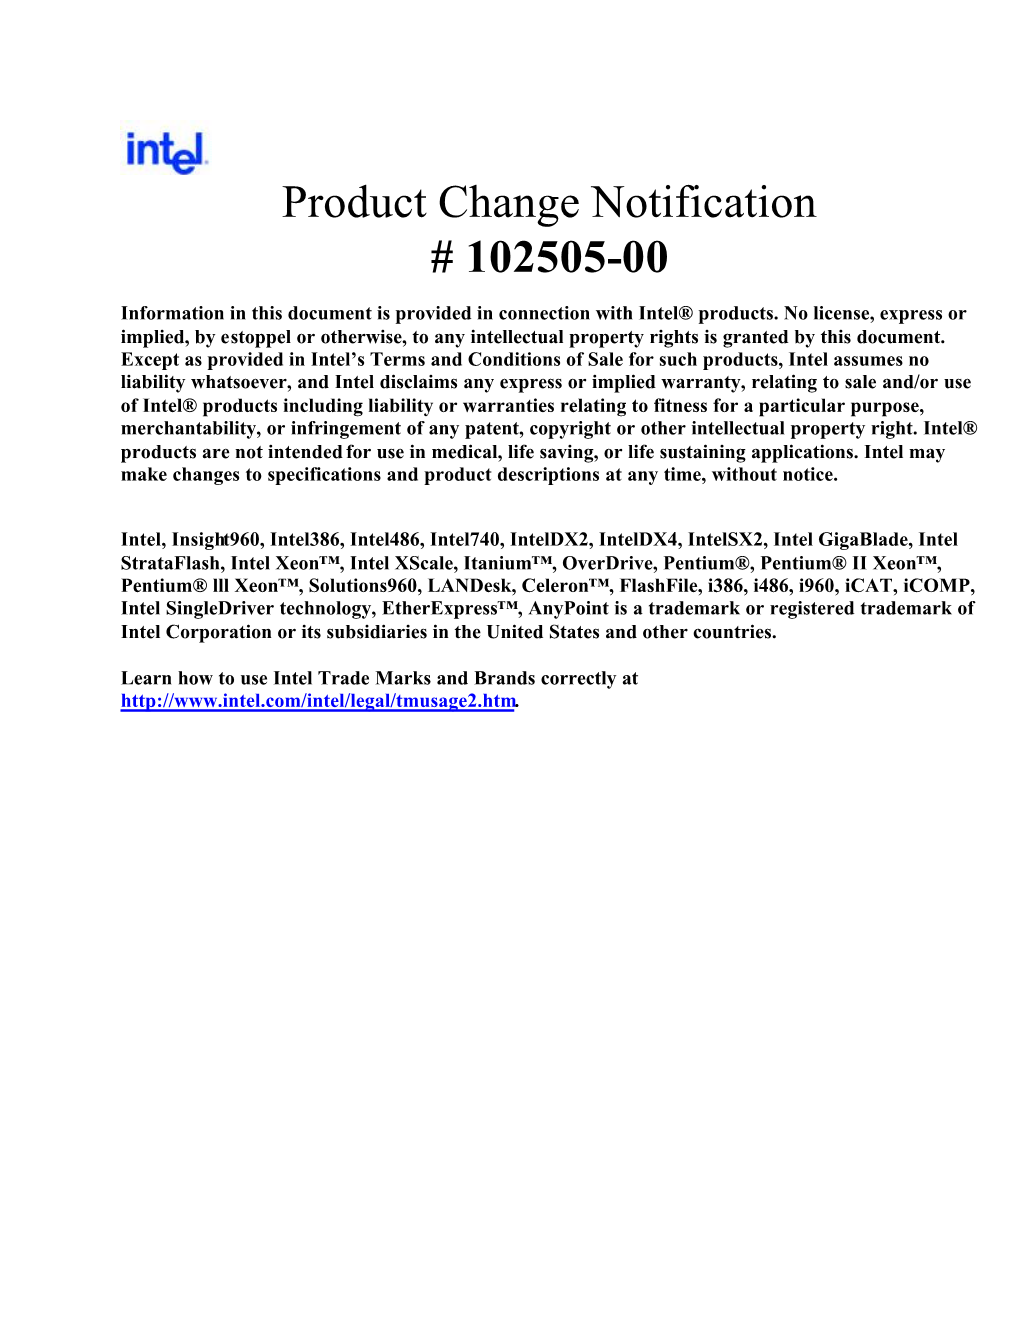 Product Change Notification # 102505-00